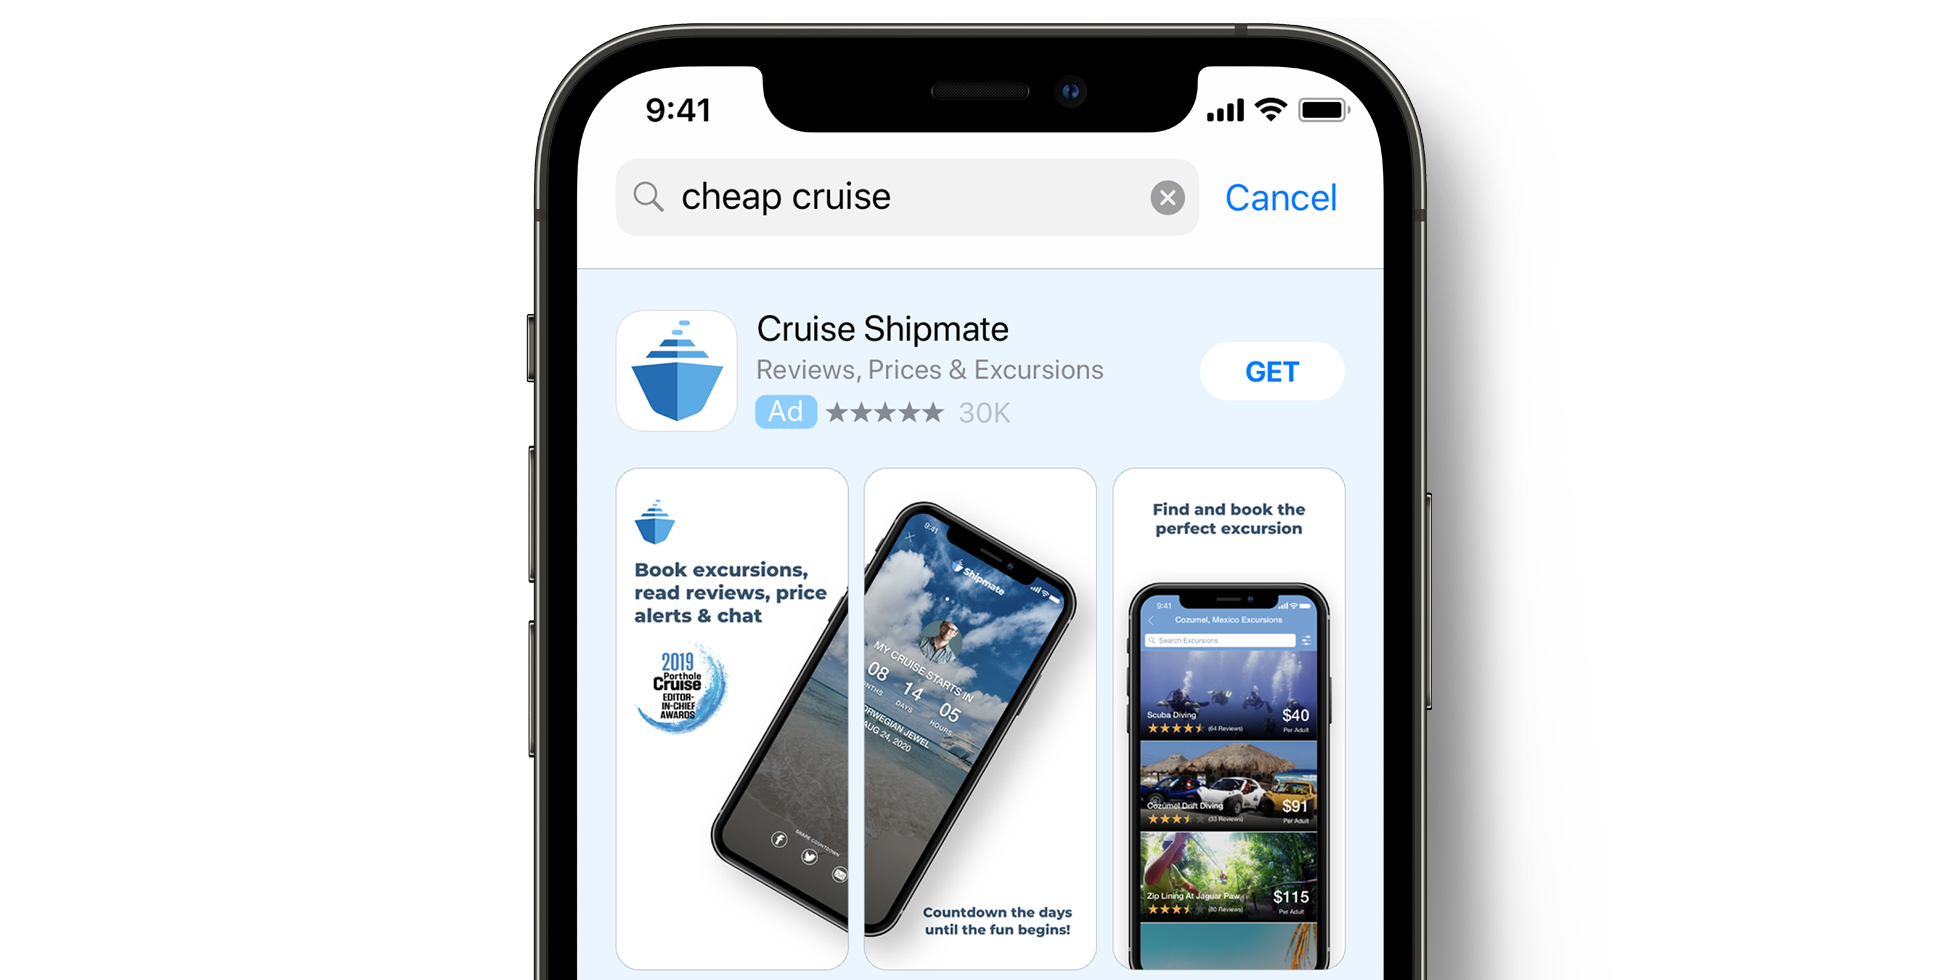 Cruise Shipmate 在 App Store 中的 Apple Search Ads 广告